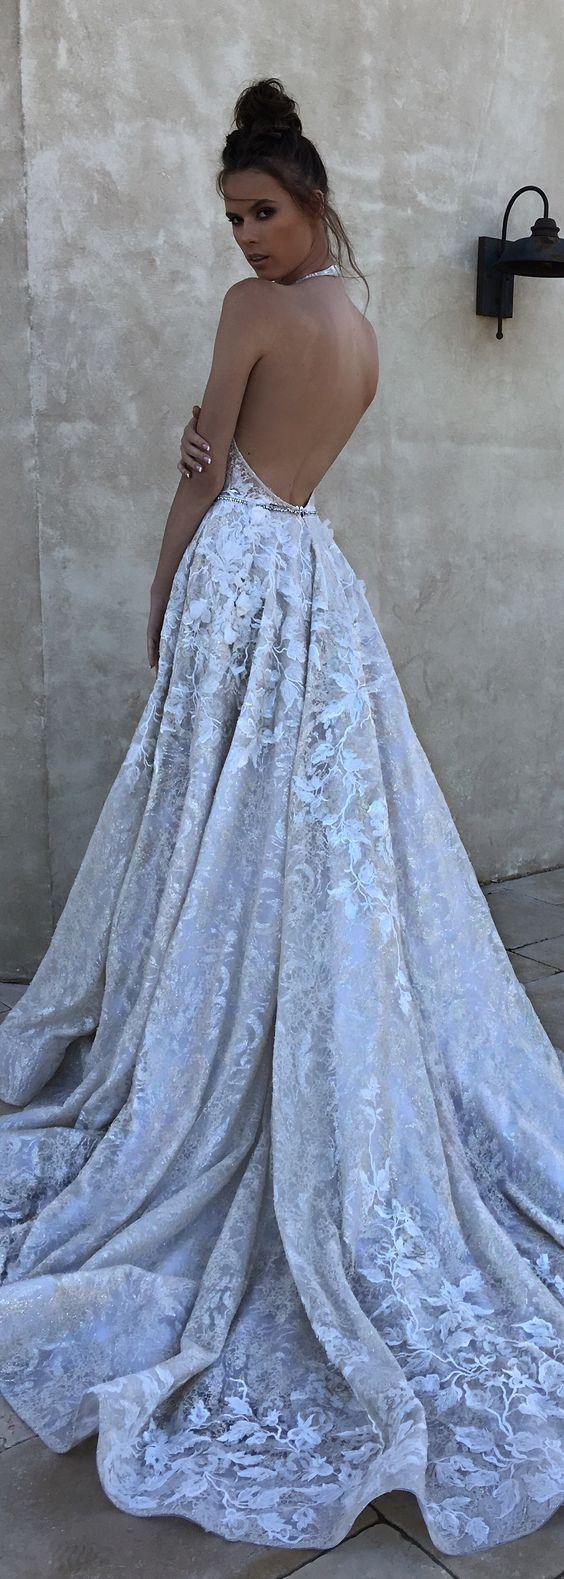 زفاف - Berta Bridal Wedding Dresses 2018